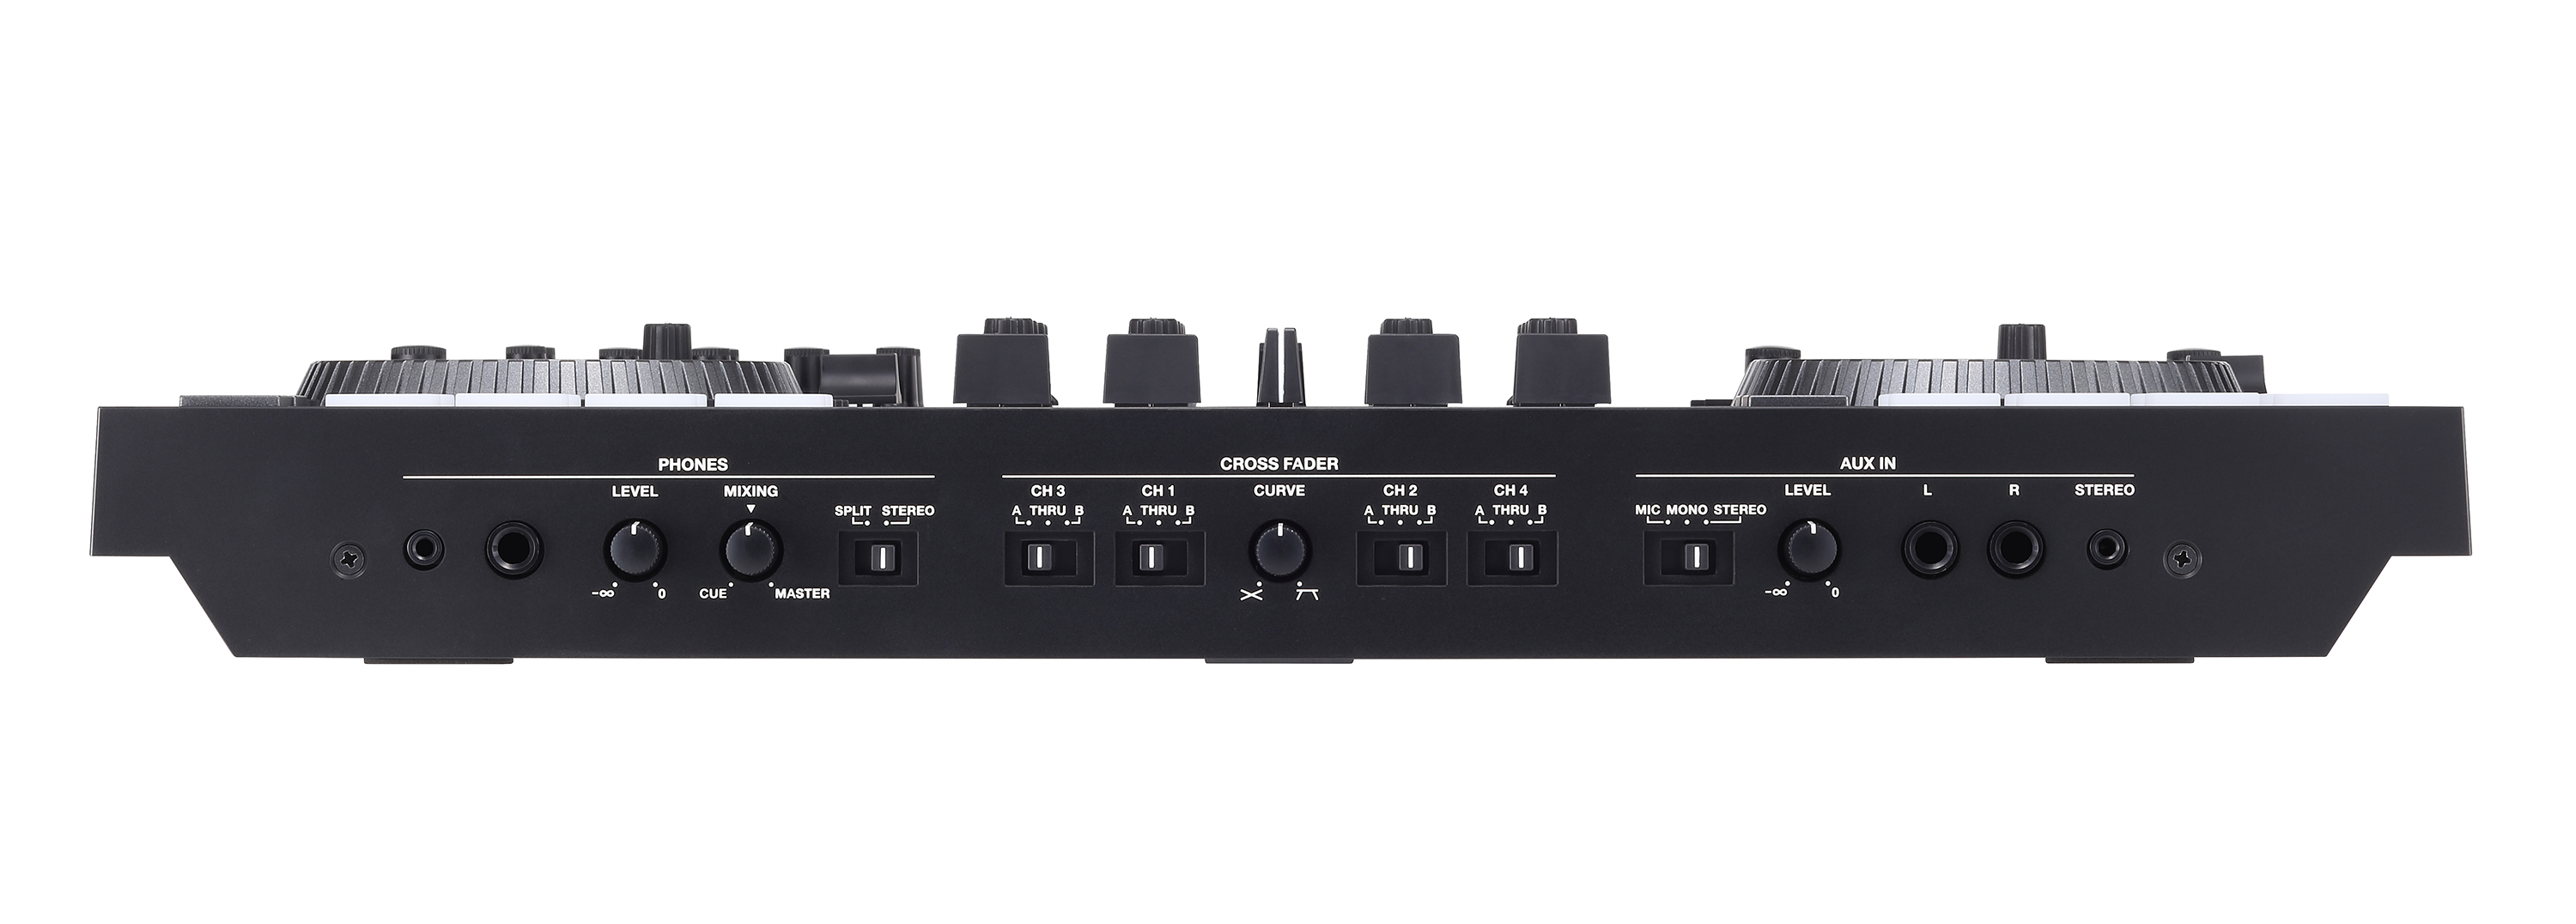 Roland Dj-707m - USB DJ controller - Variation 2